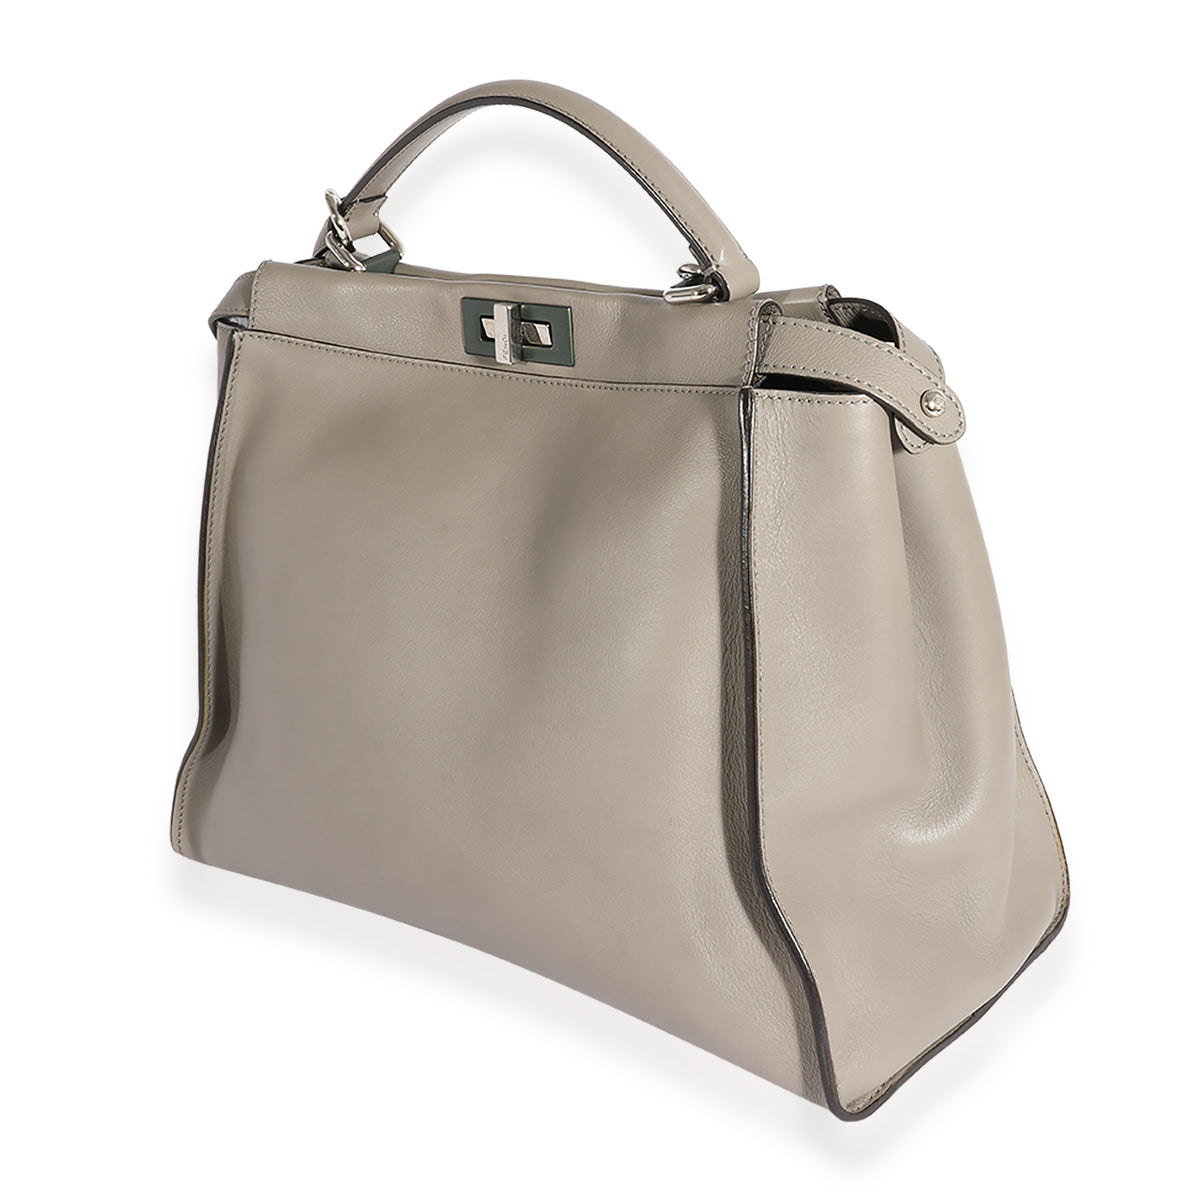 Fendi Gray Leather Large Peekaboo Bag